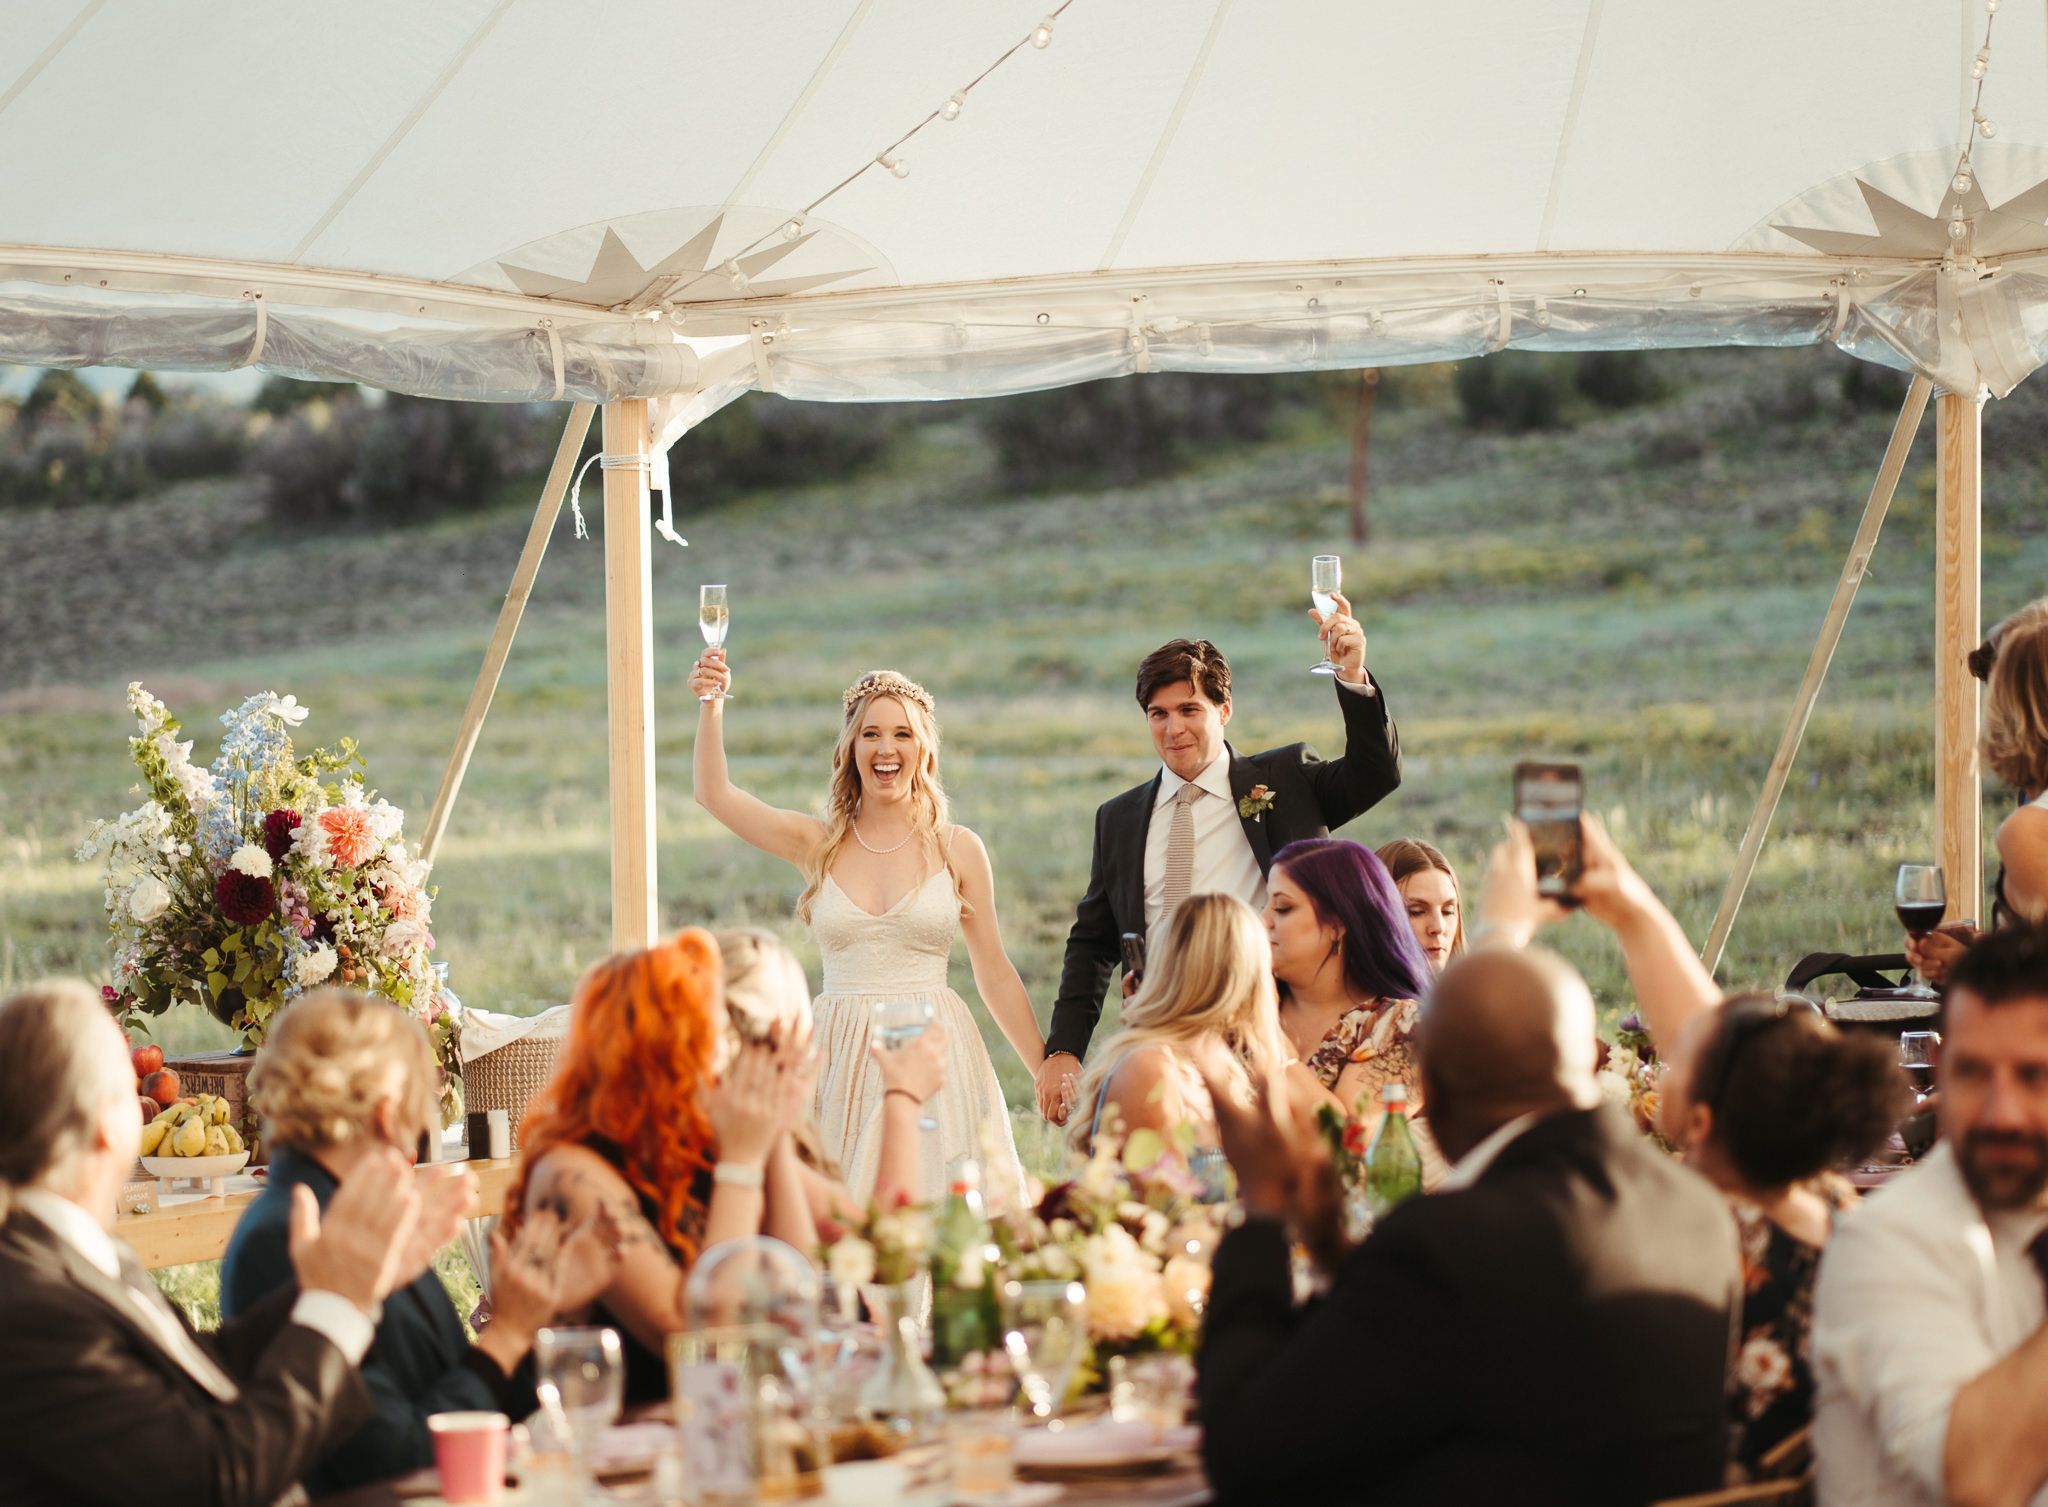 Couple toasting at wedding reception